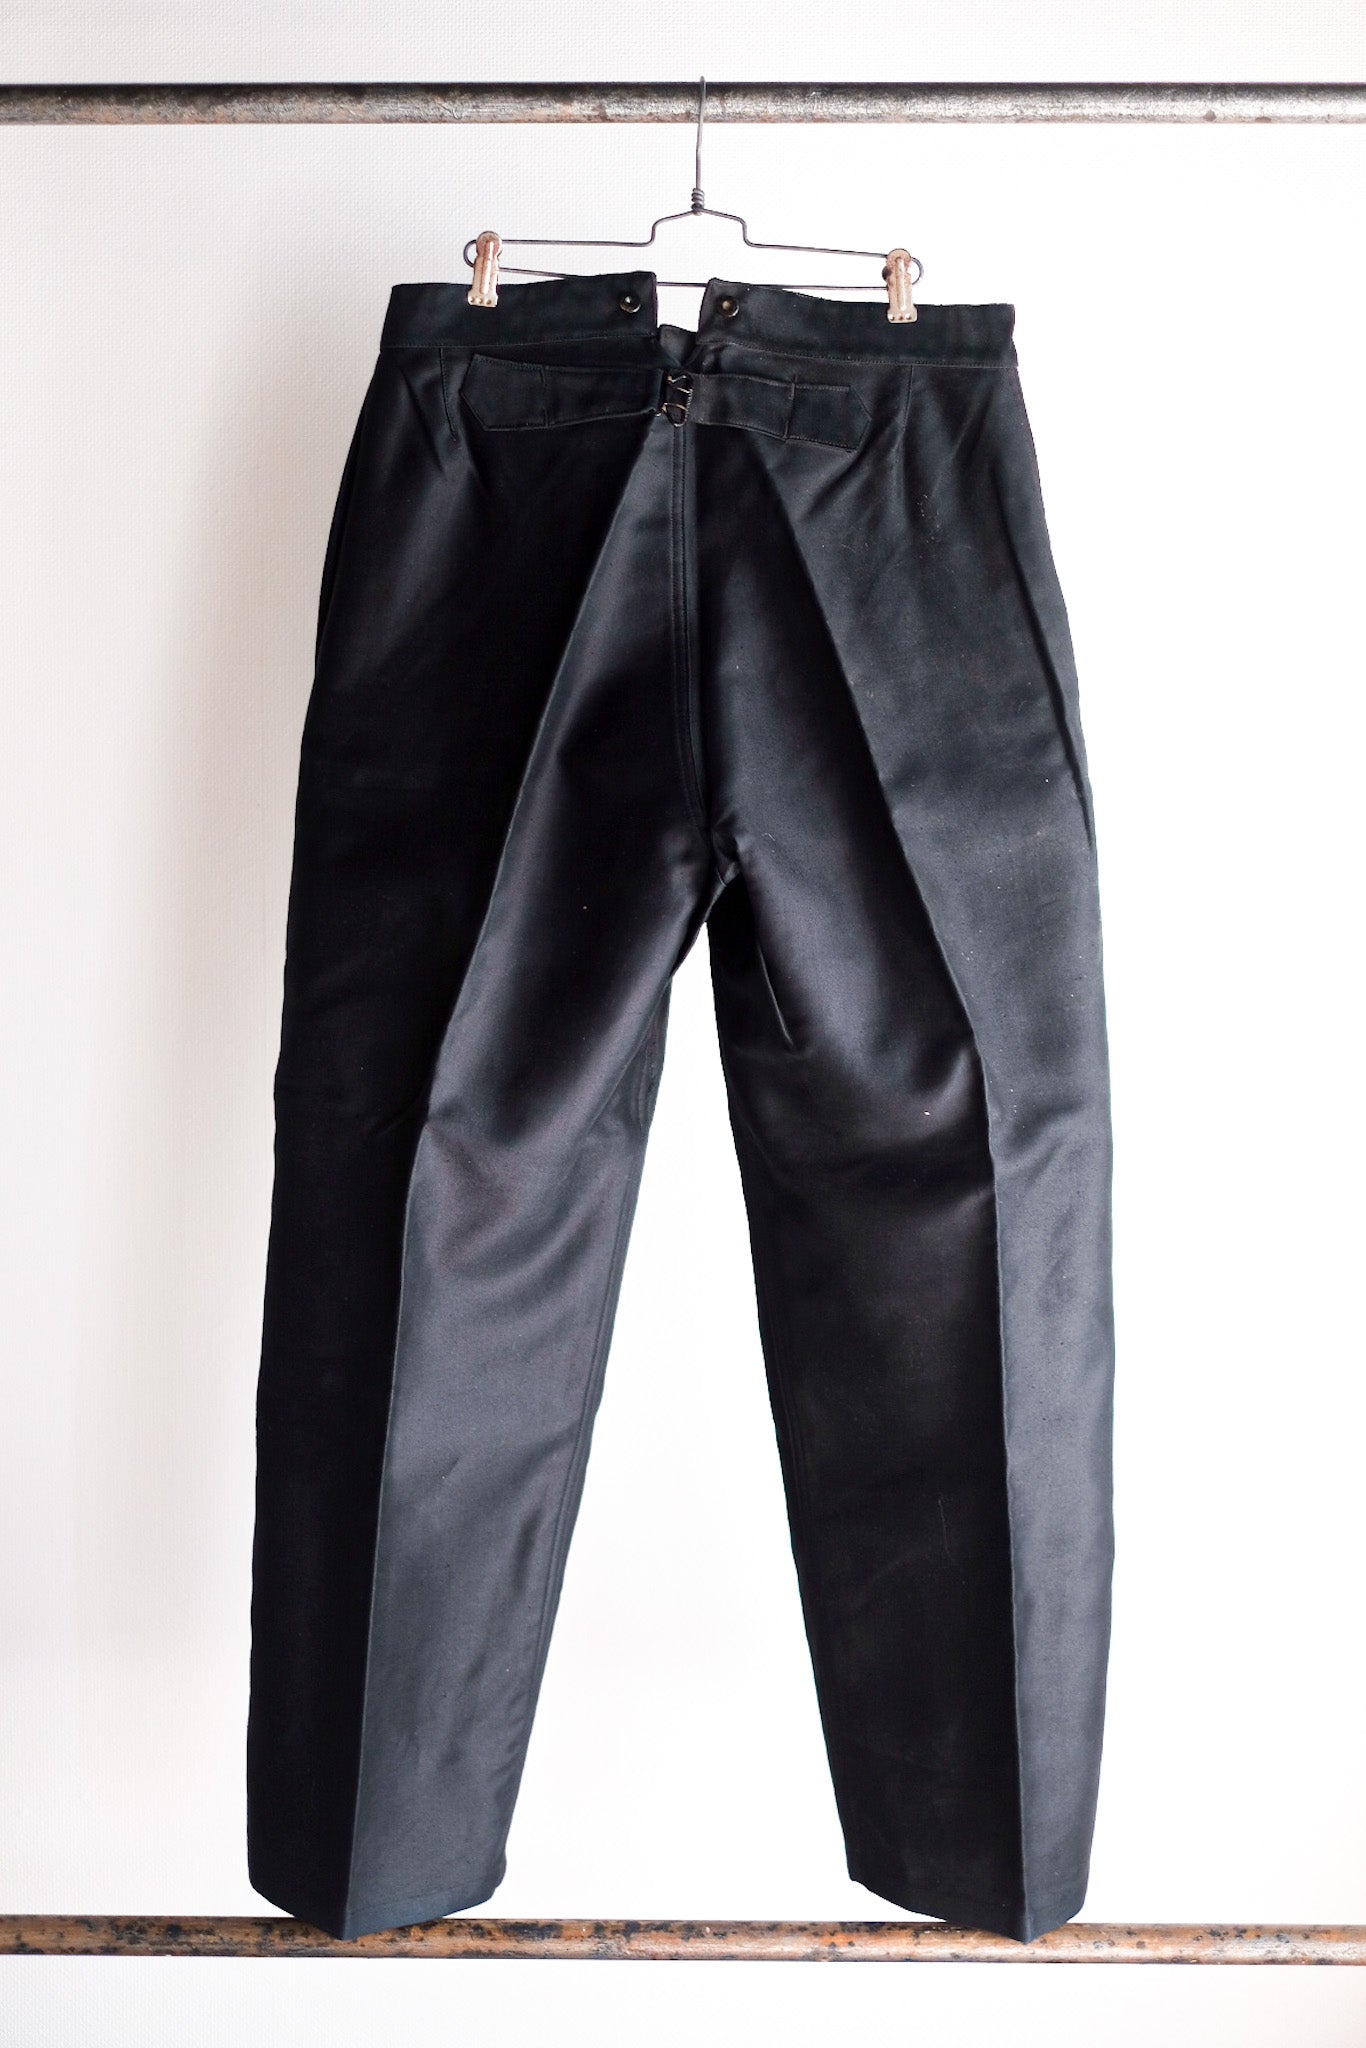 [~ 40's] กางเกงโมล่สกินสีดำวินเทจฝรั่งเศส "Adolphe Lafont" "Dead Stock"